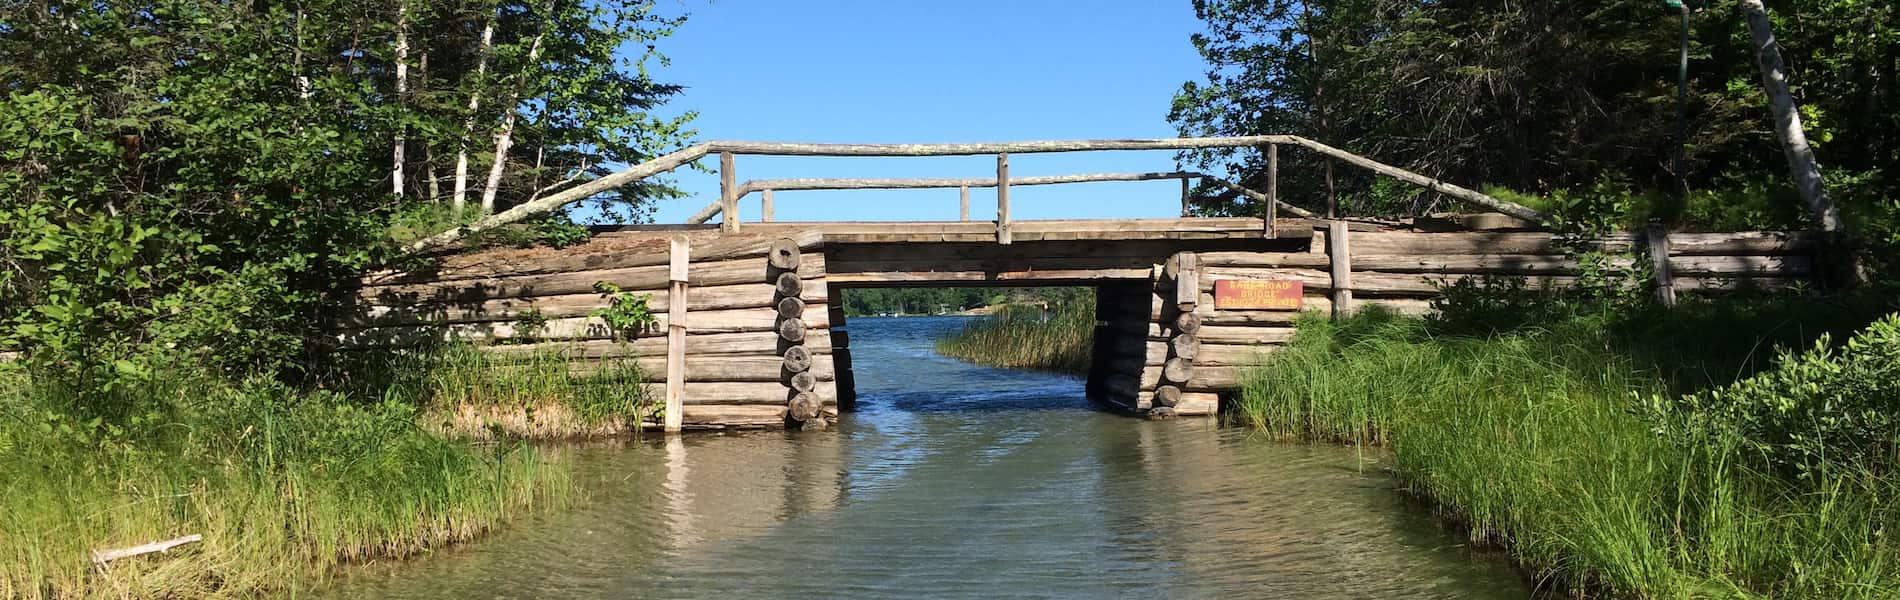 approaching-an-old-timber-bridge-and-entering-lake